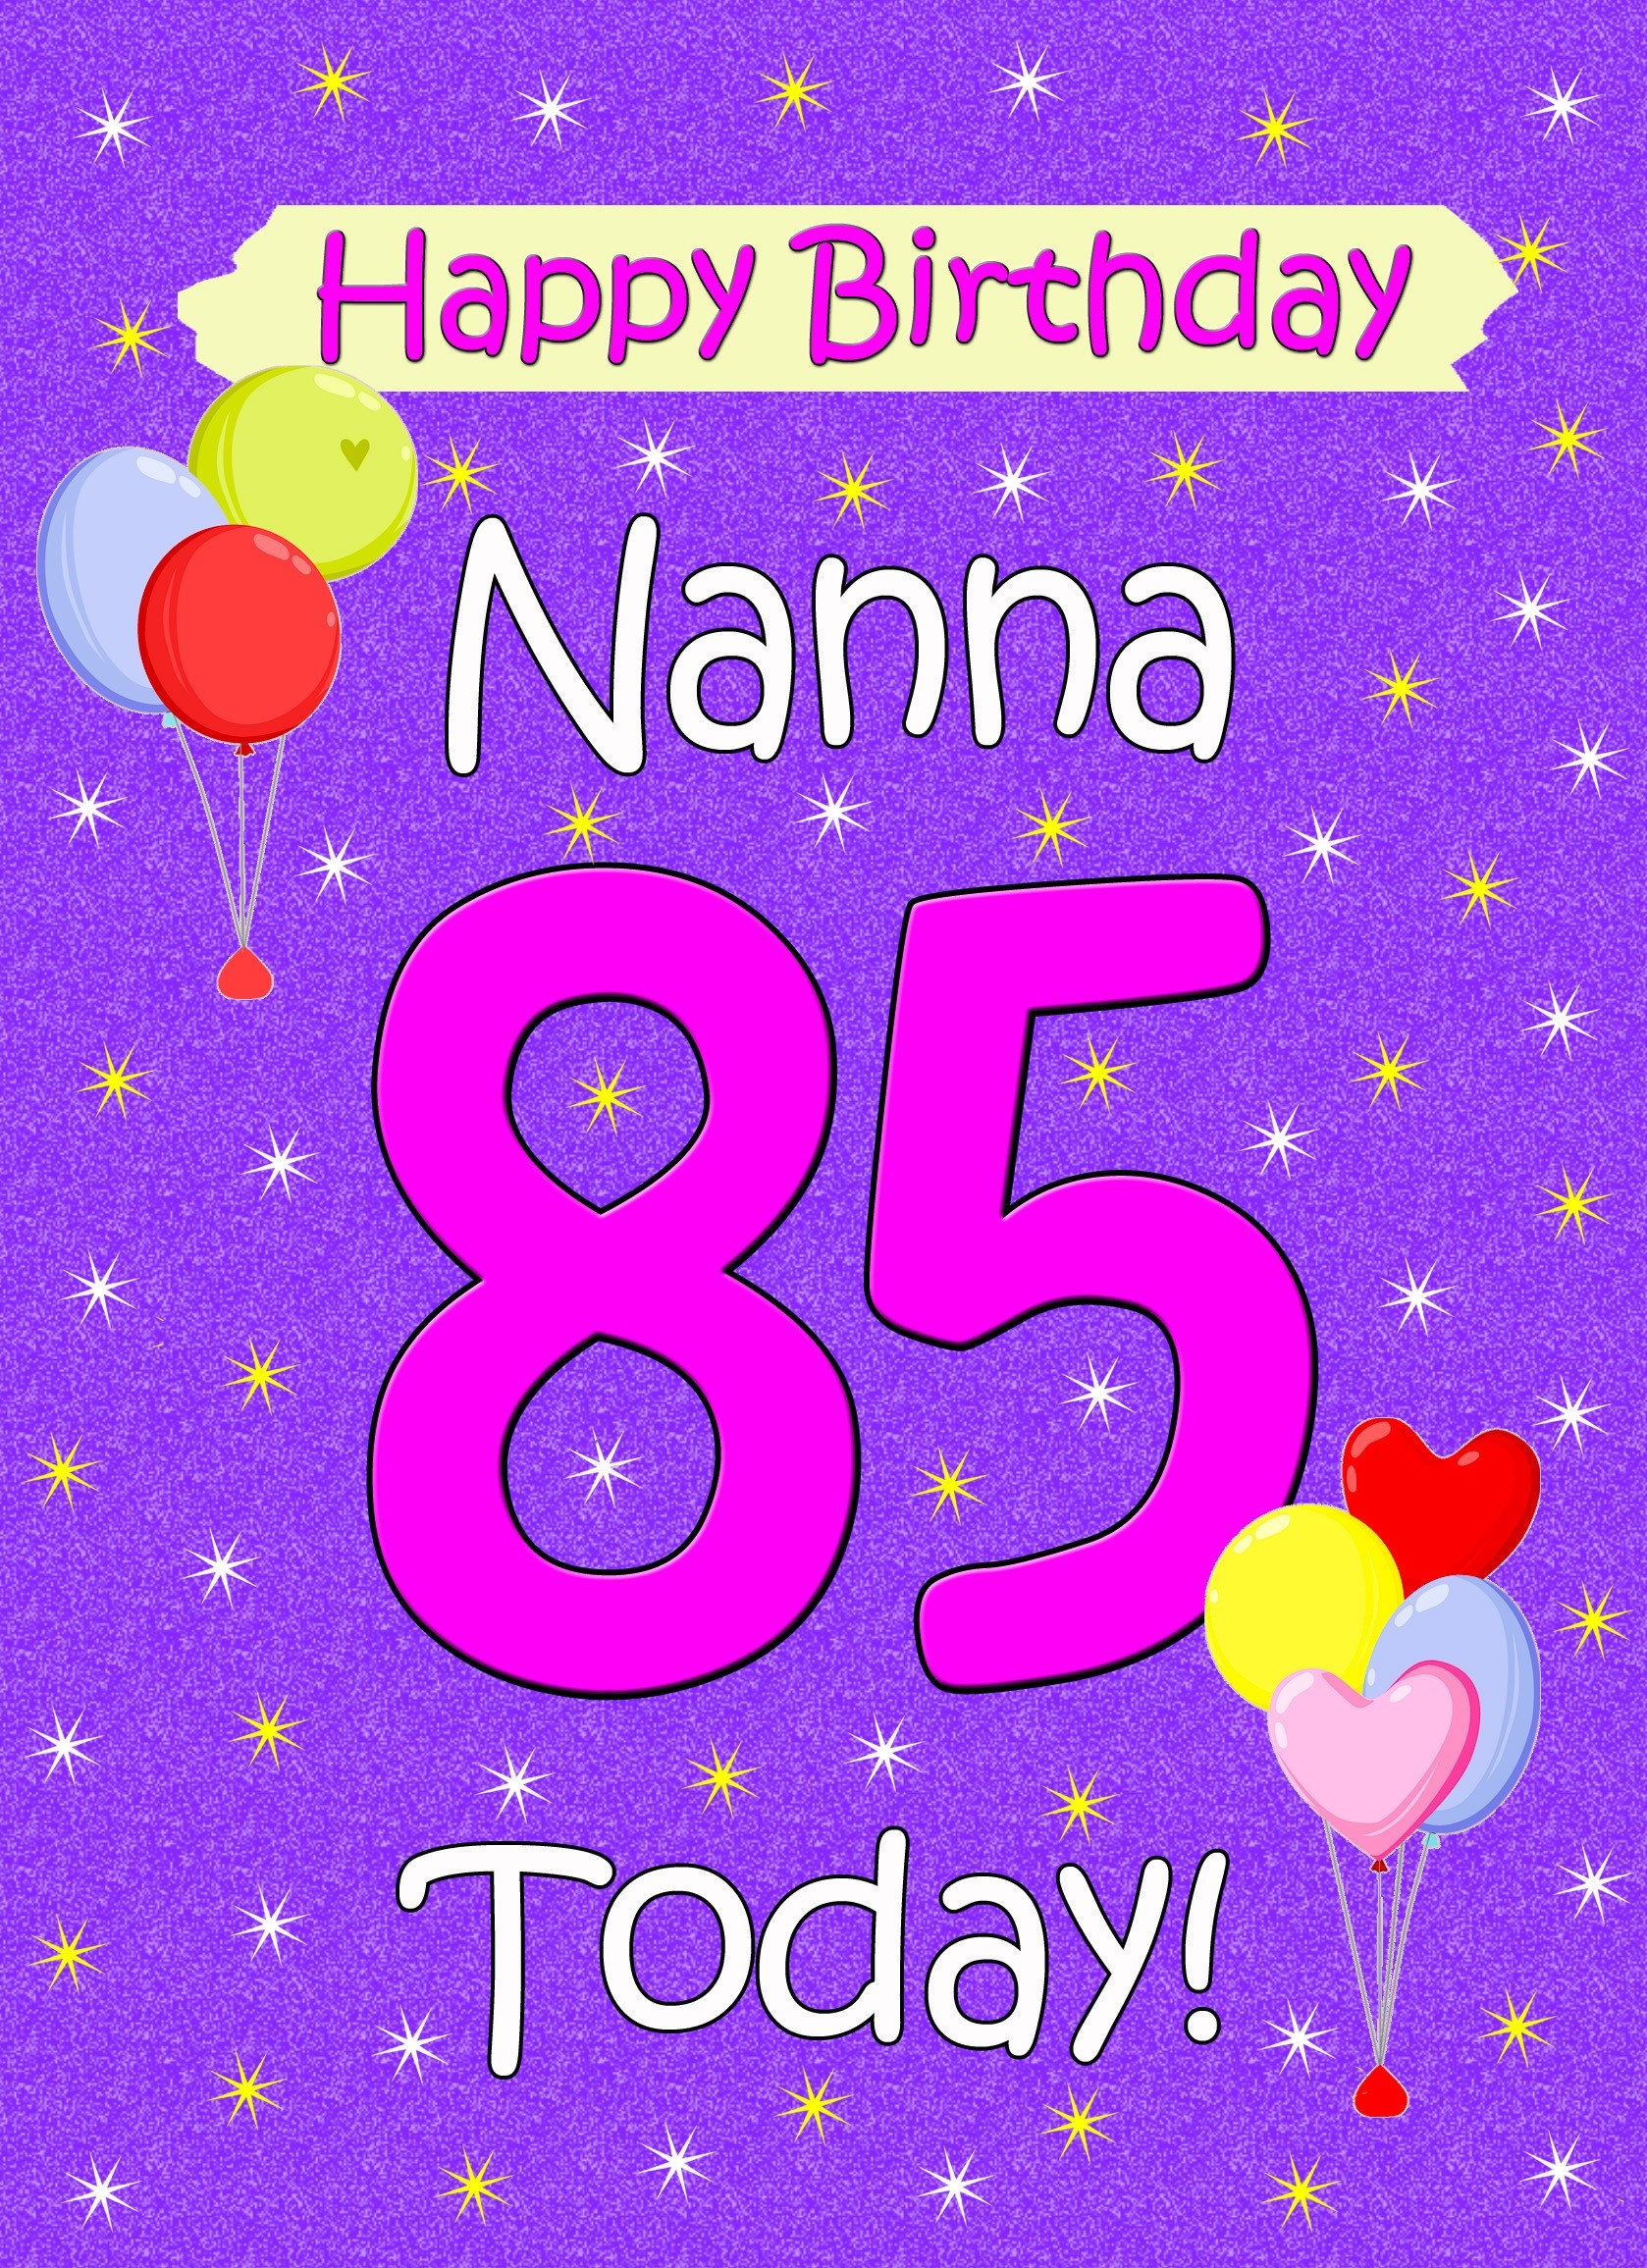 Nanna 85th Birthday Card (Lilac)